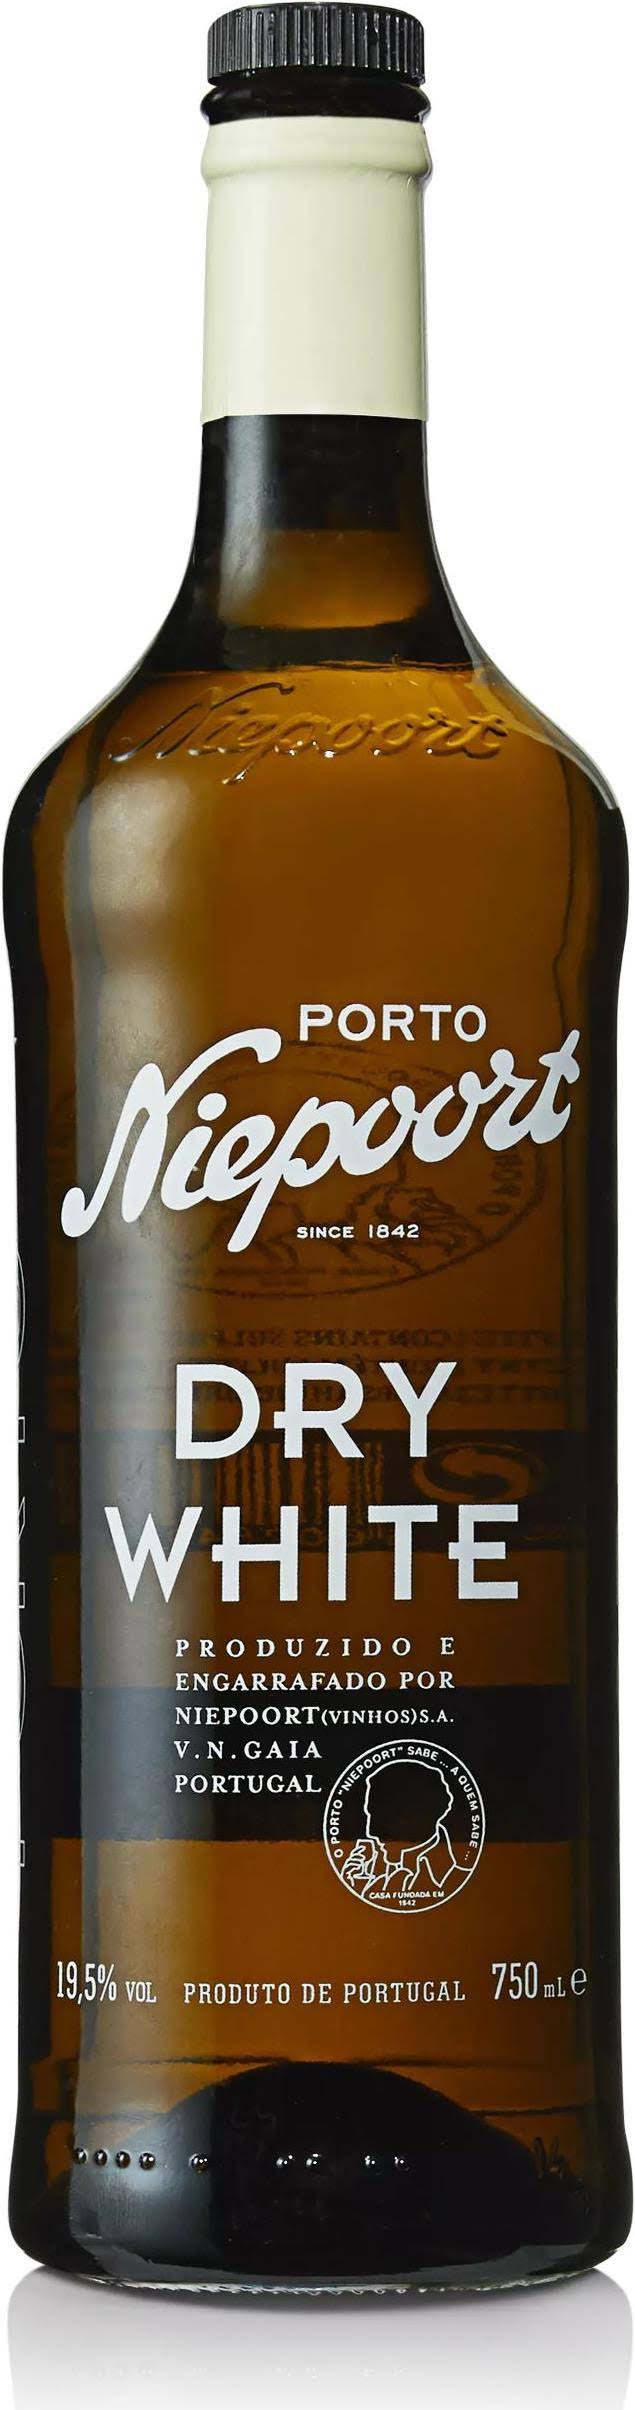 Dry White 0,375 L - Niepoort